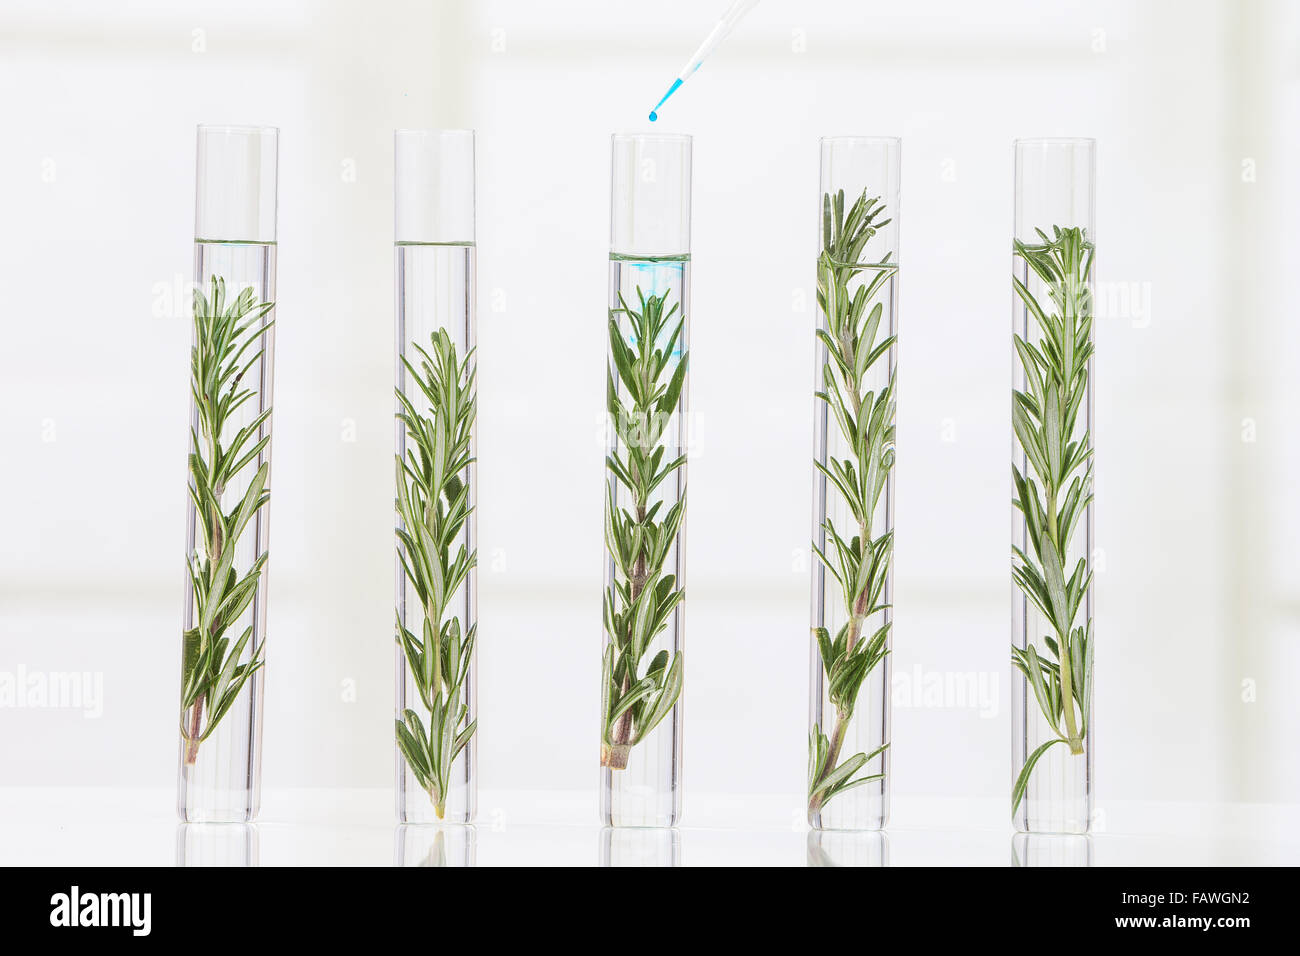 laboratory cloning experiment on plants Stock Photo